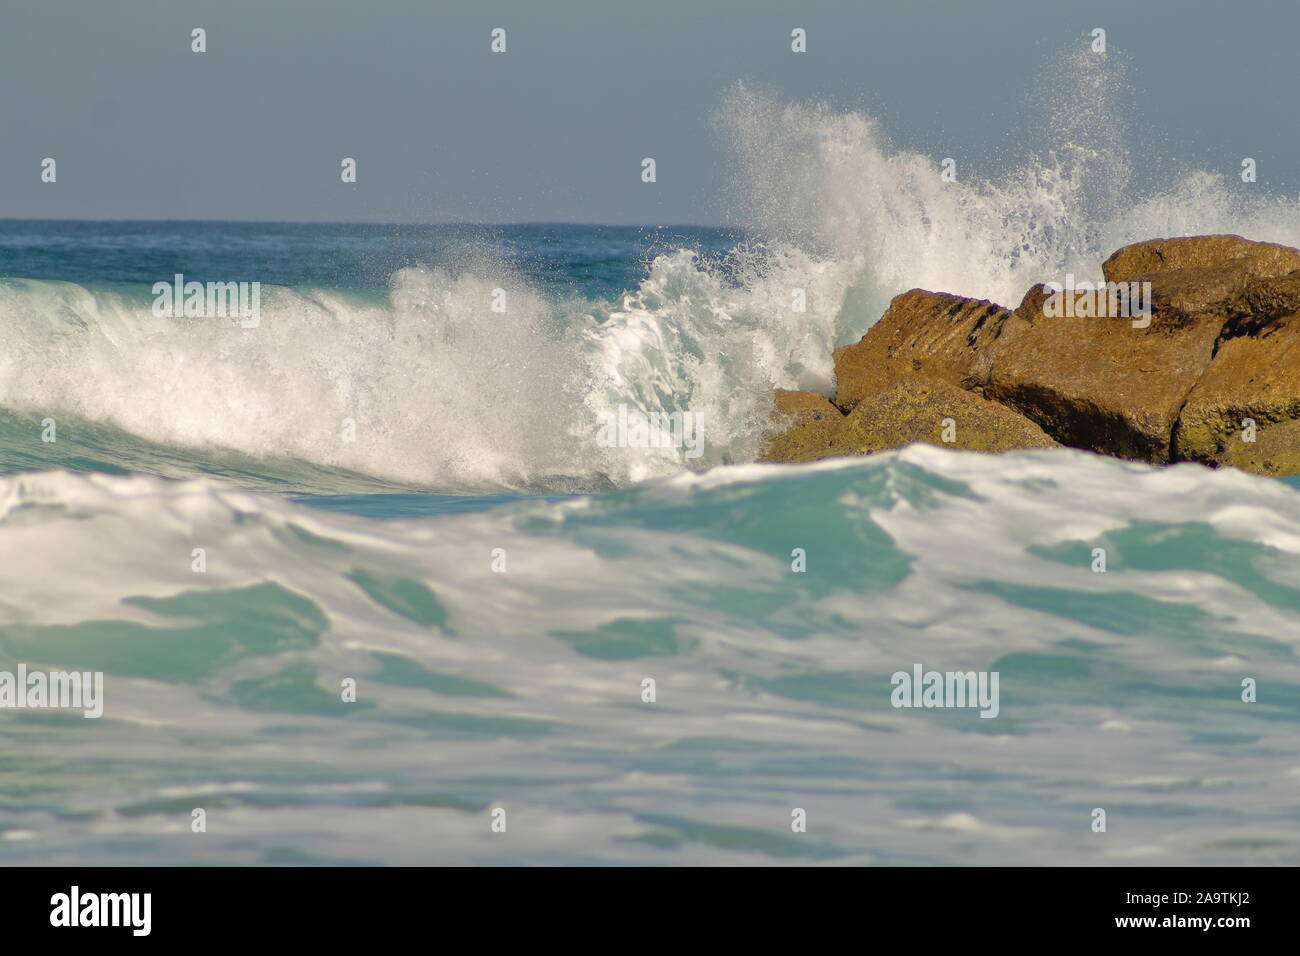 Photo de la mer Méditerranée surf prises à Ashkelon Marina, Israël. Banque D'Images